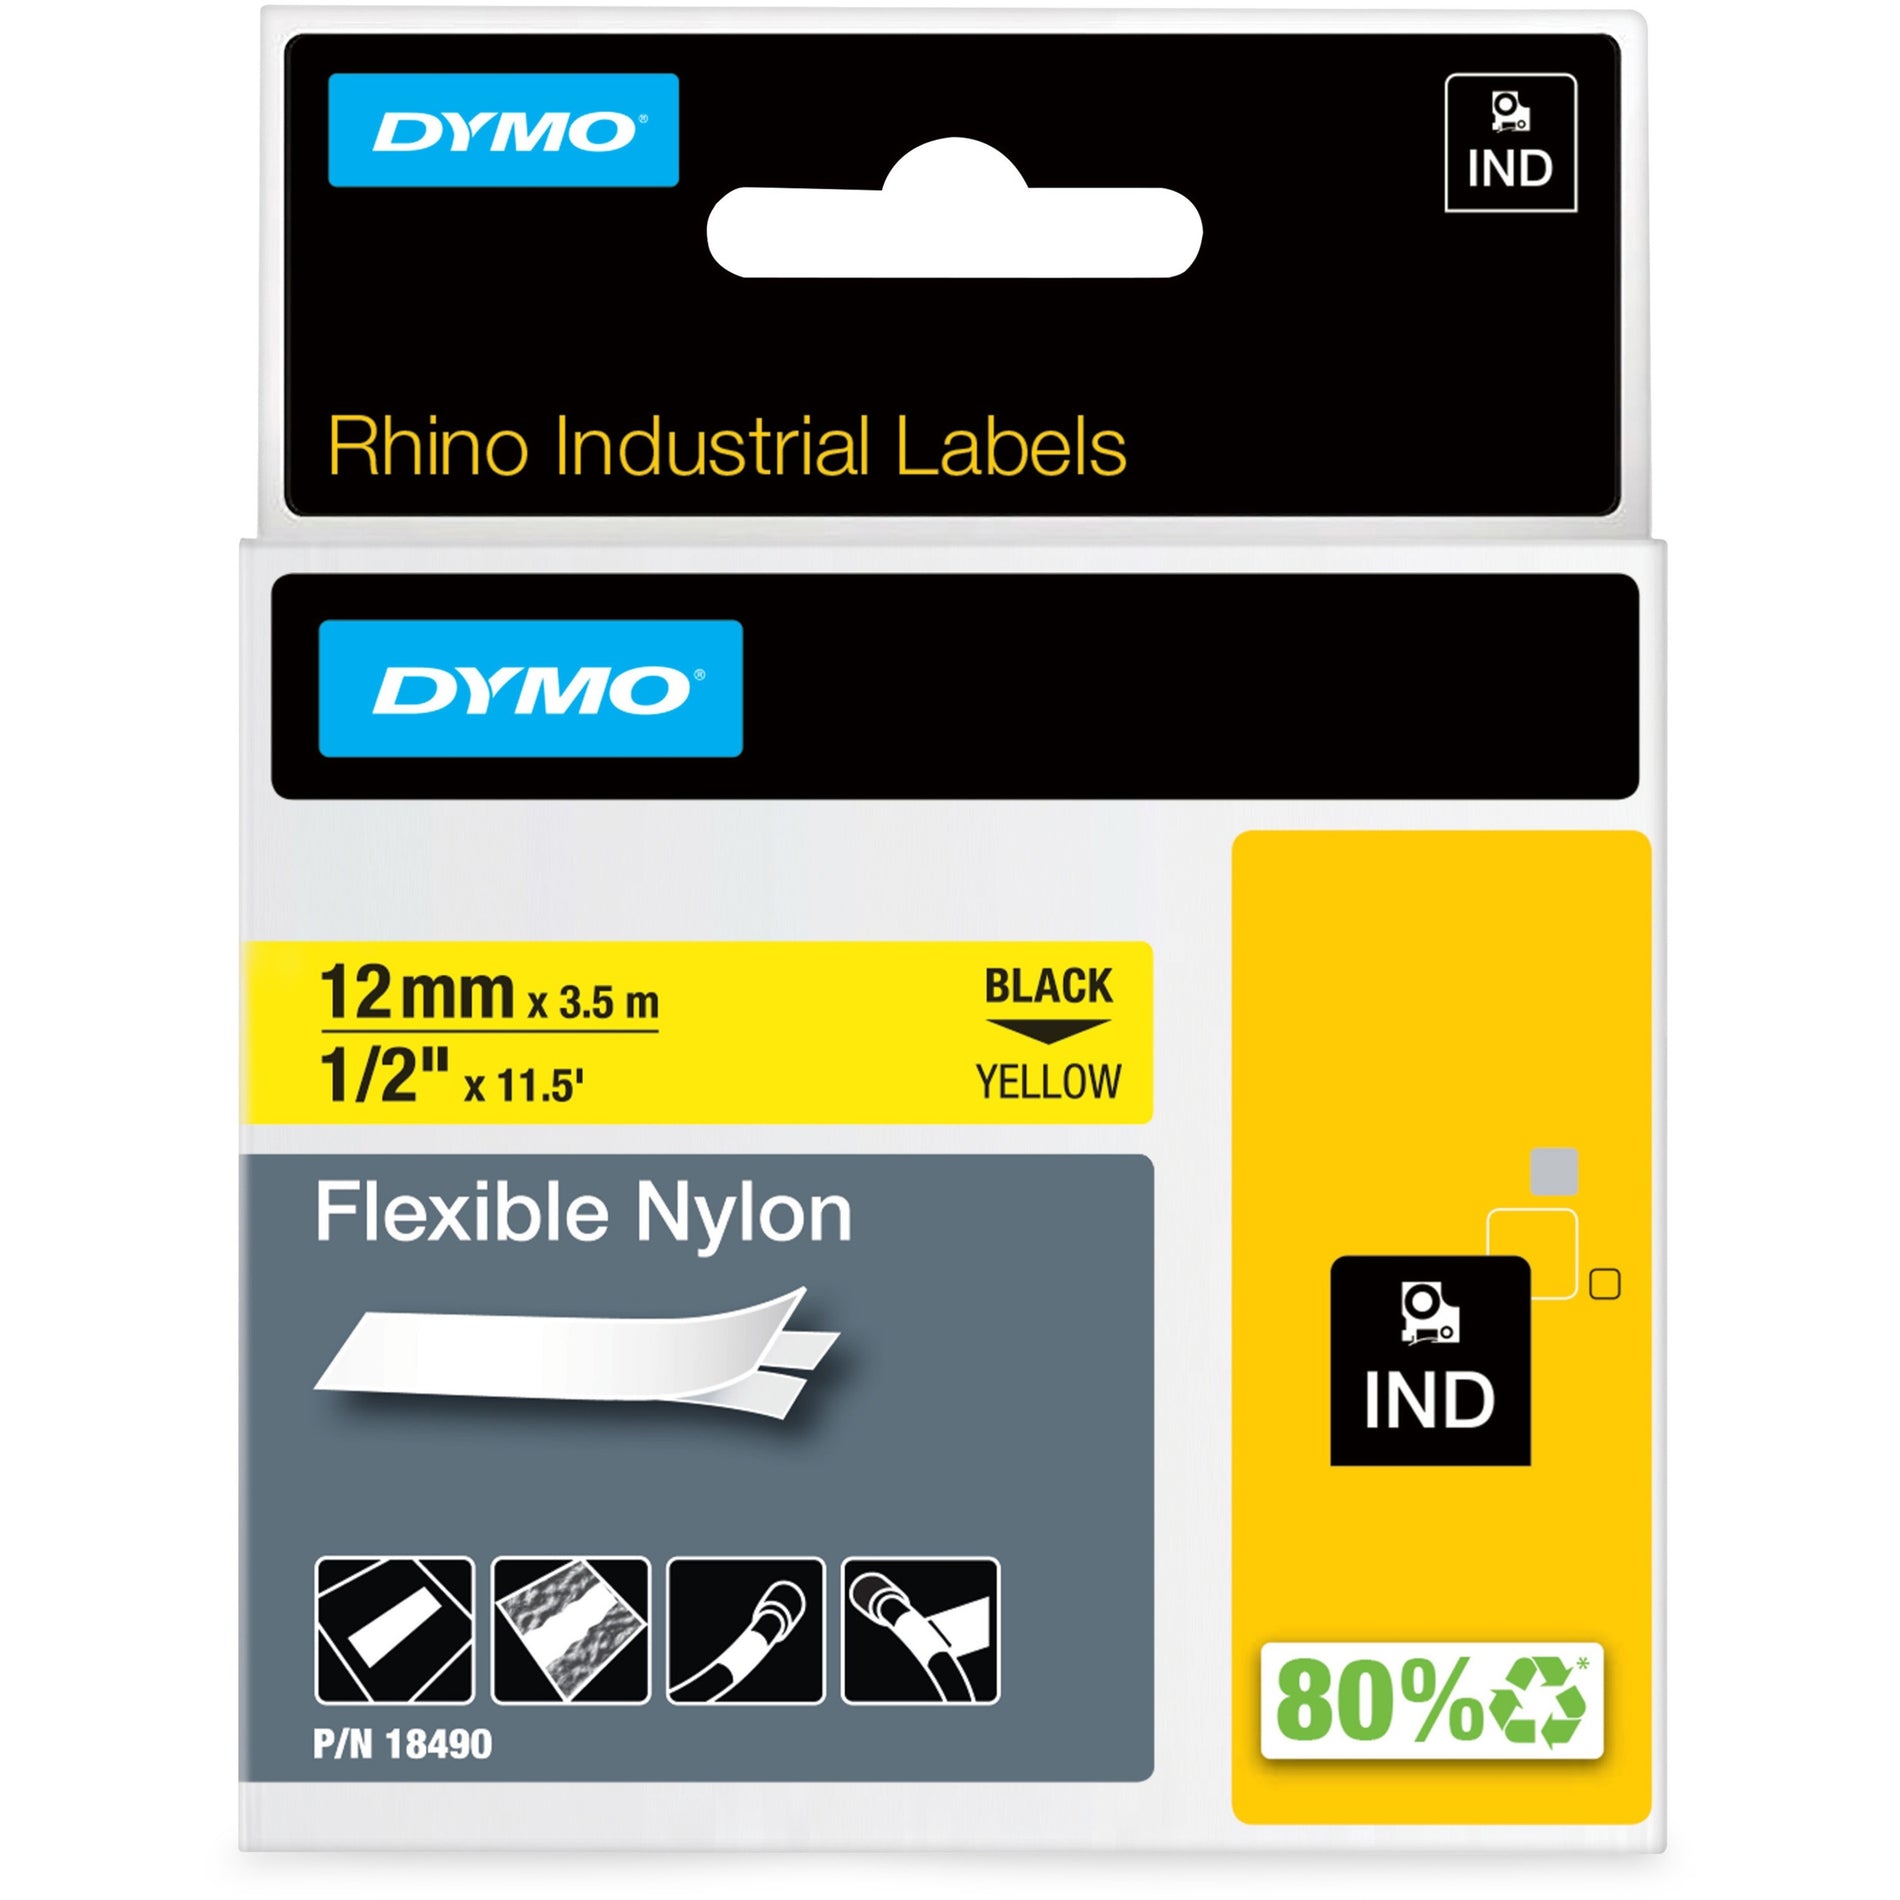 Dymo 18490 Rhino Flexible Nylon Labels, 1/2"x11.5', Yellow